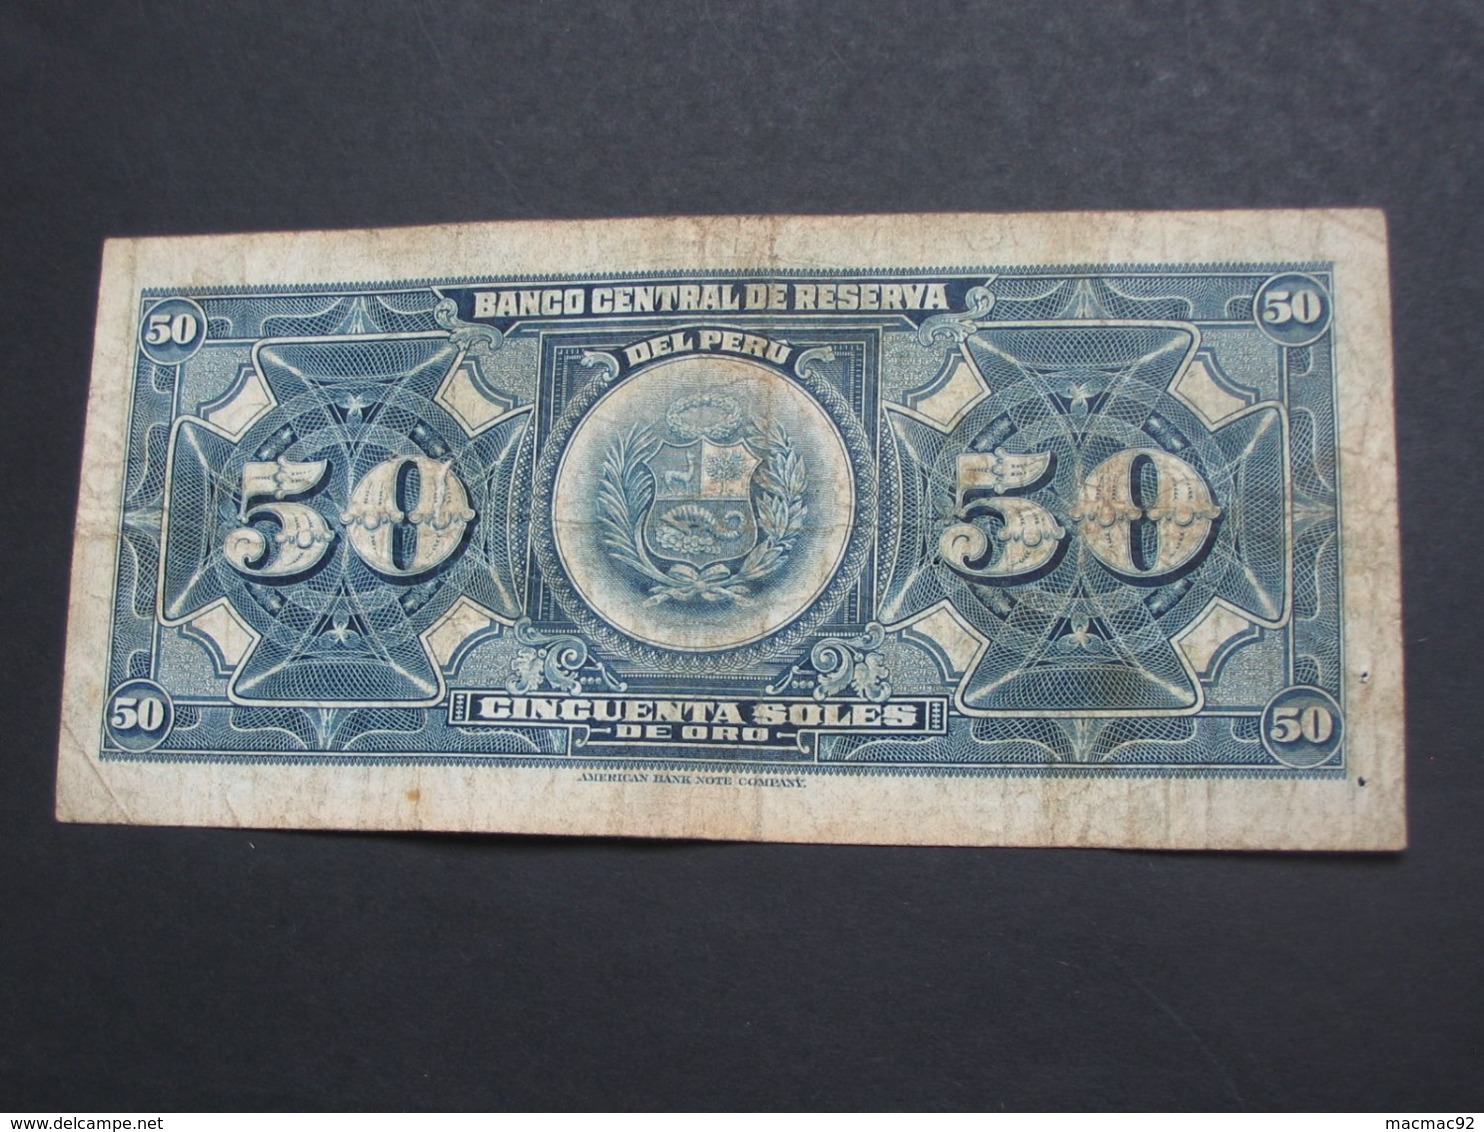 50 Cincuenta Soles De Oro 1965 - Banco Central De Reserva Del Peru  **** EN ACHAT IMMEDIAT **** - Peru